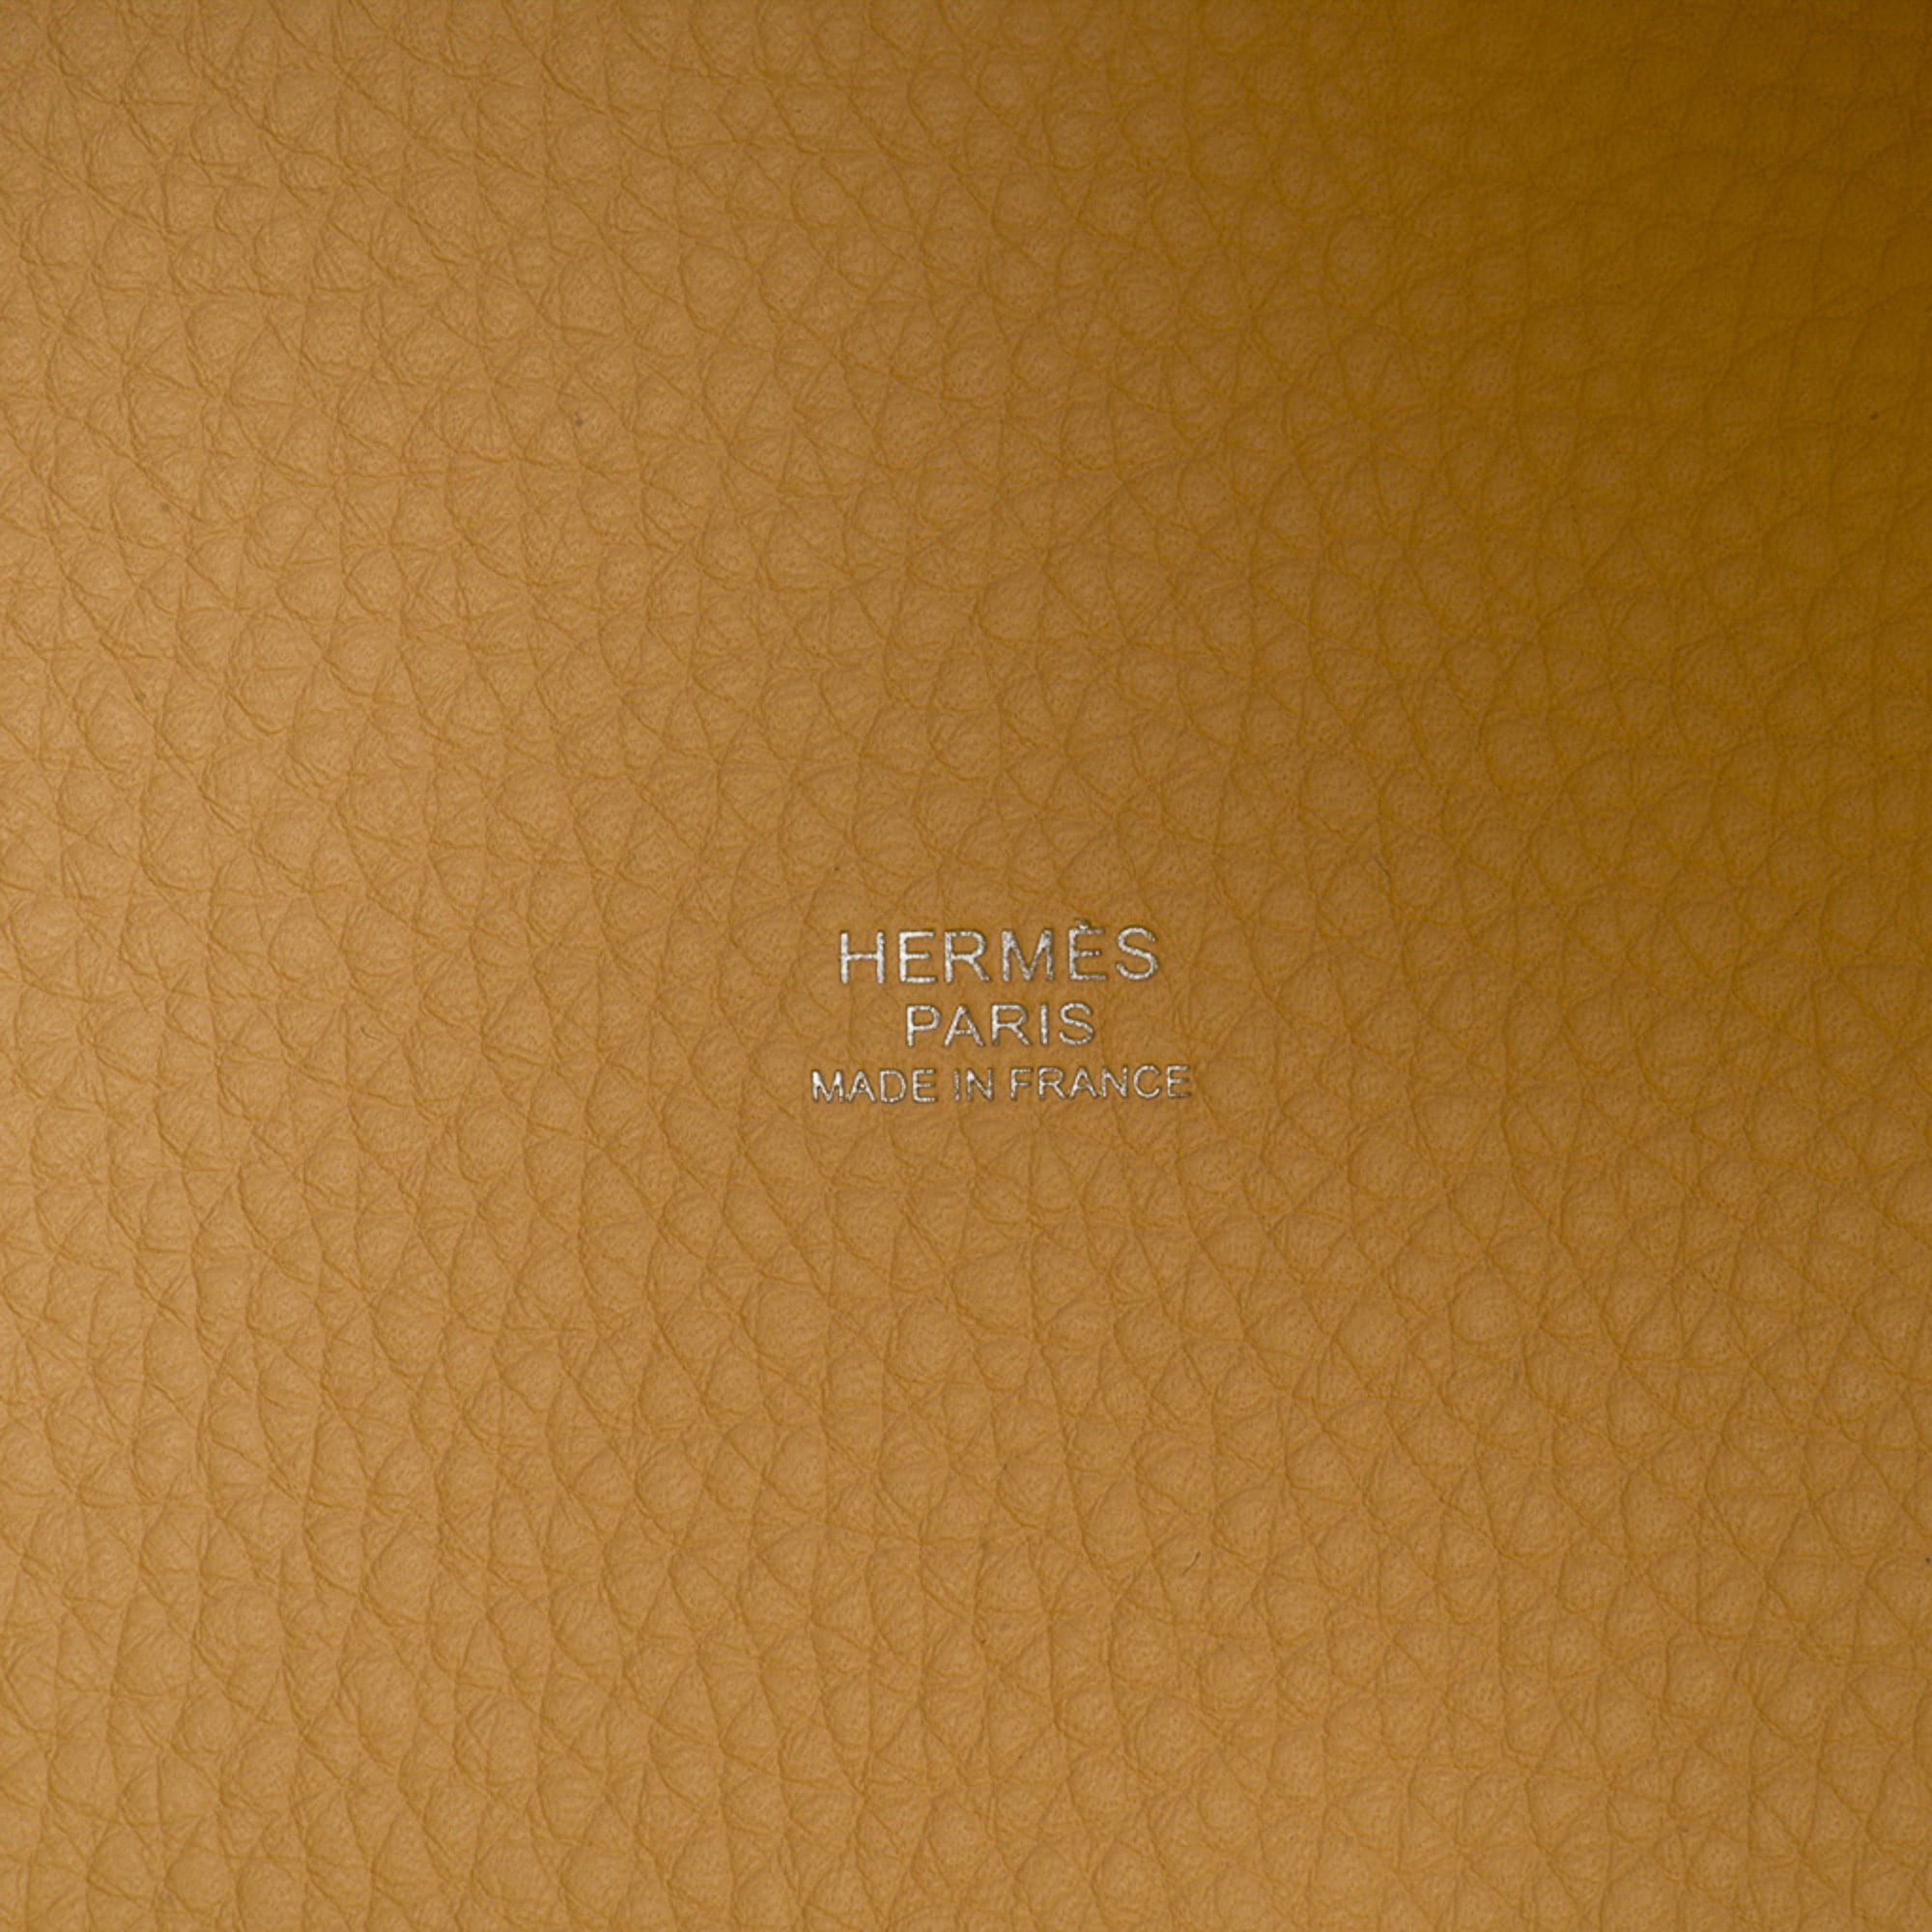 Hermes Picotin Lock 18 Casaque Bag Lime / Nata Bi-Color Tote